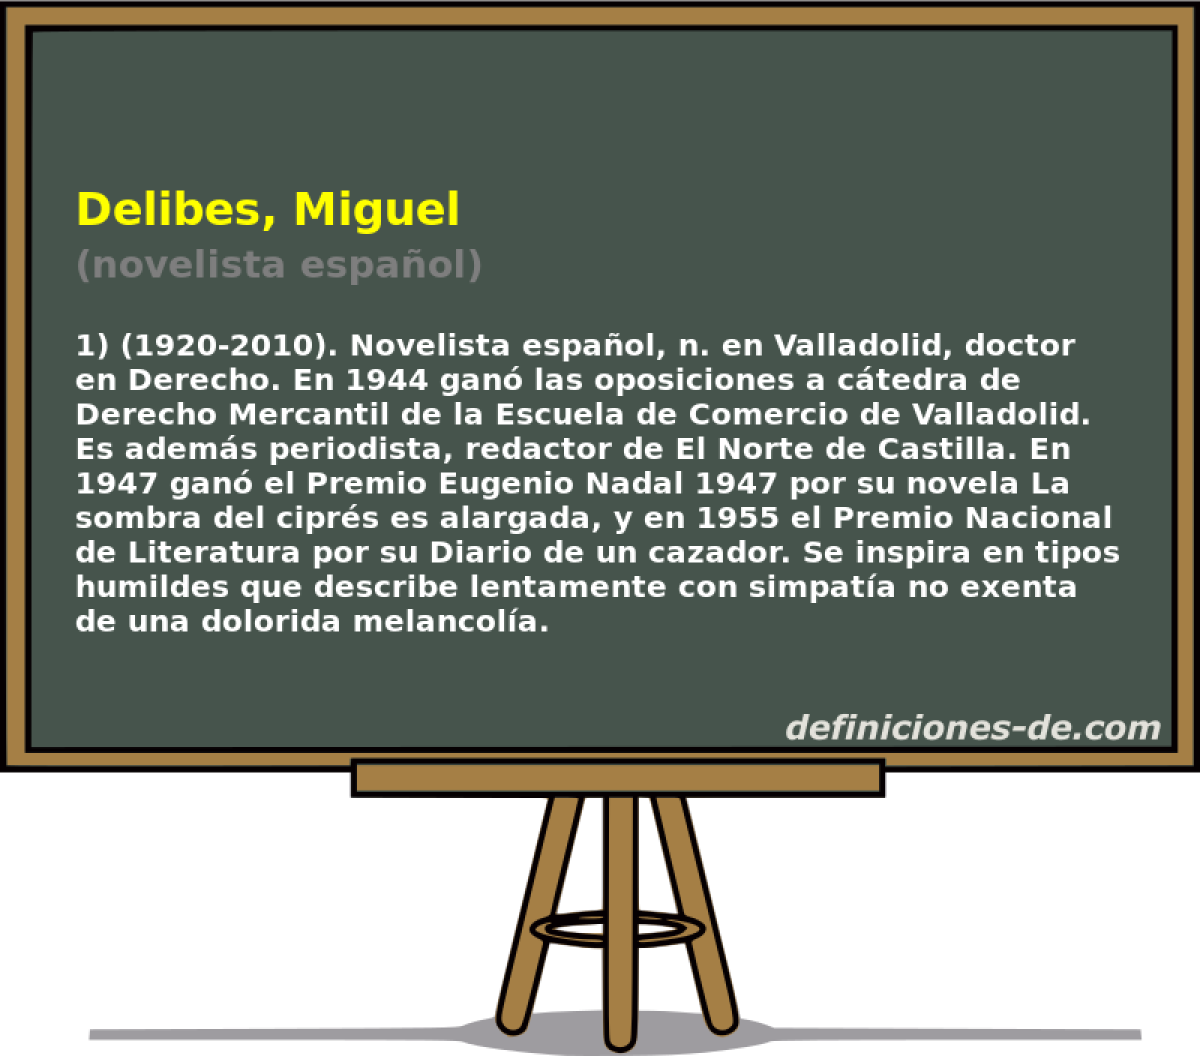 Delibes, Miguel (novelista espaol)